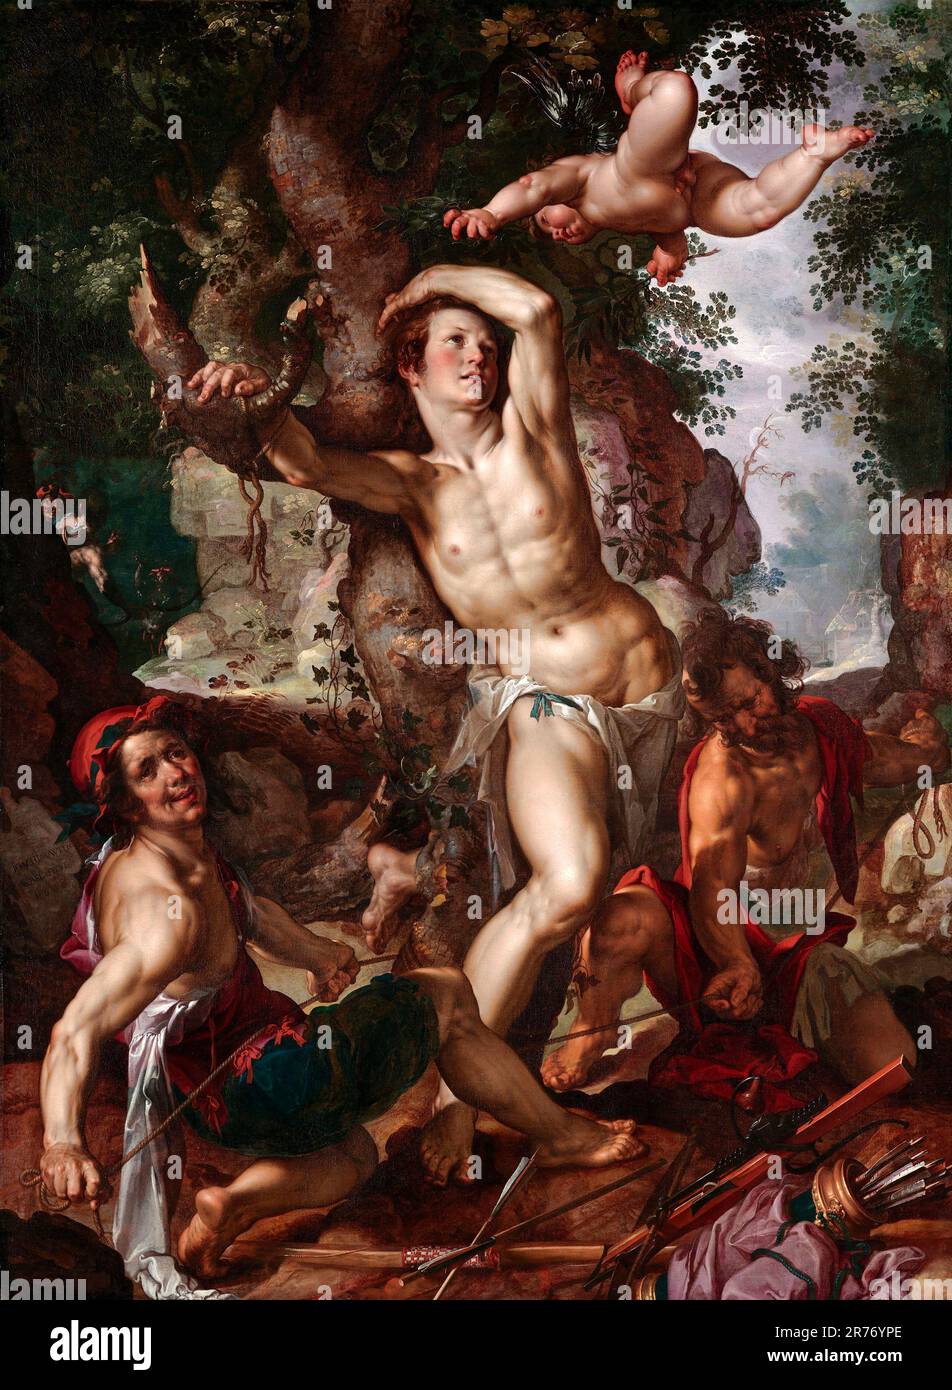 Joachim Wtewael. Il martirio di San Sebastiano di Joachim Anthoniszoon Wtewael (1566-1638), olio su tela, 1600 Foto Stock